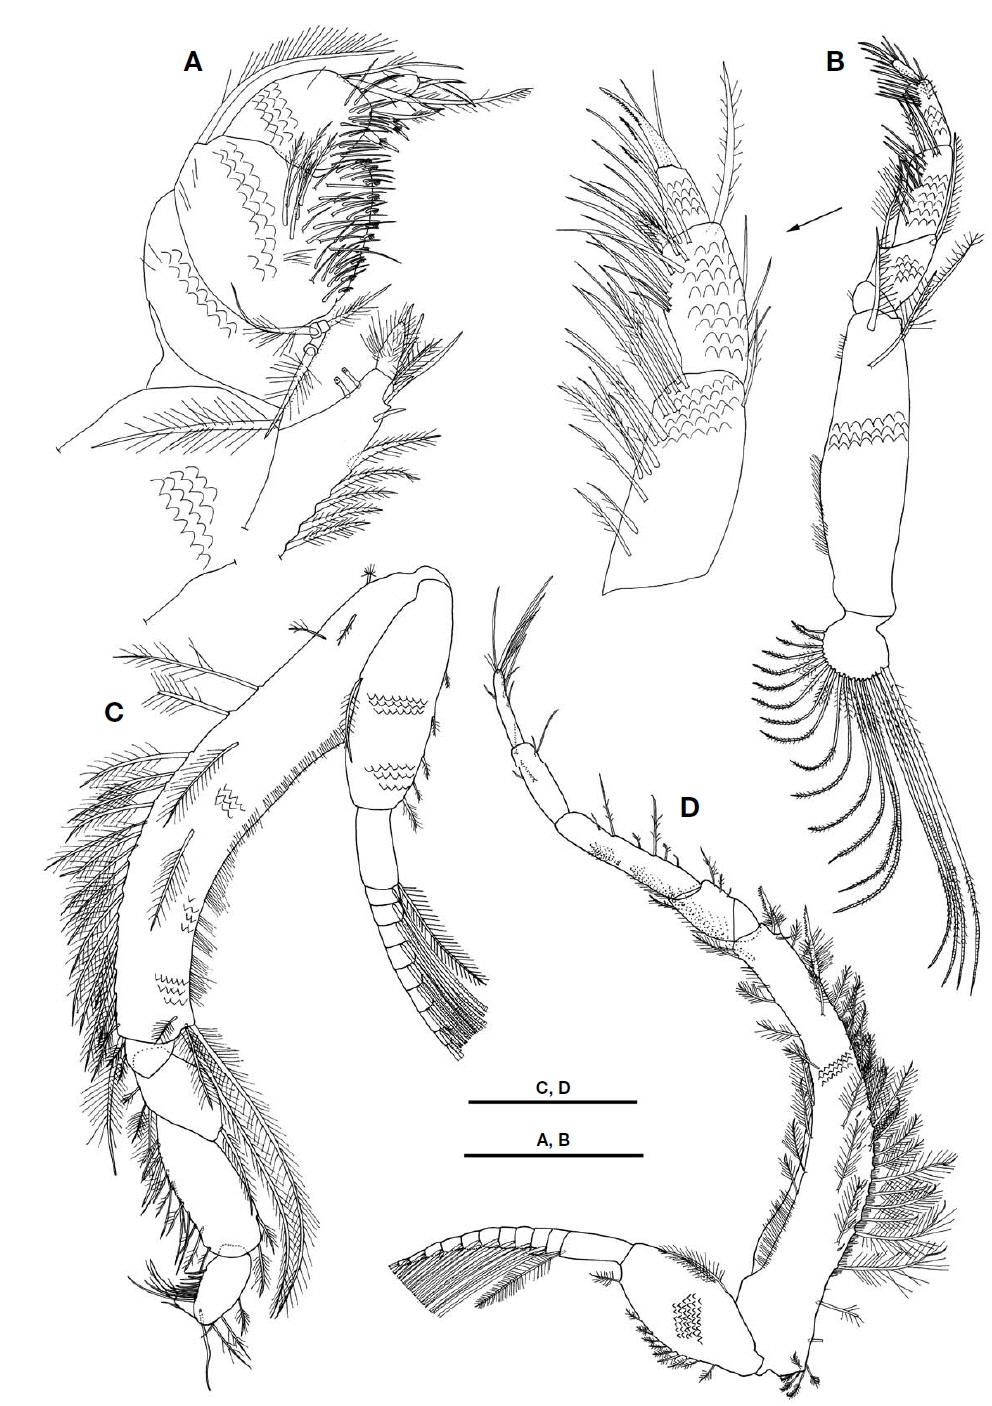 Lamprops carinatus Hart, 1930, female, 7.8 mm. A, Maxilliped 1; B, Maxilliped 2; C, Maxilliped 3; D, Pereopod 1. Scale bars: A=0.1 mm, B, C=0.2 mm, D=0.3 mm.